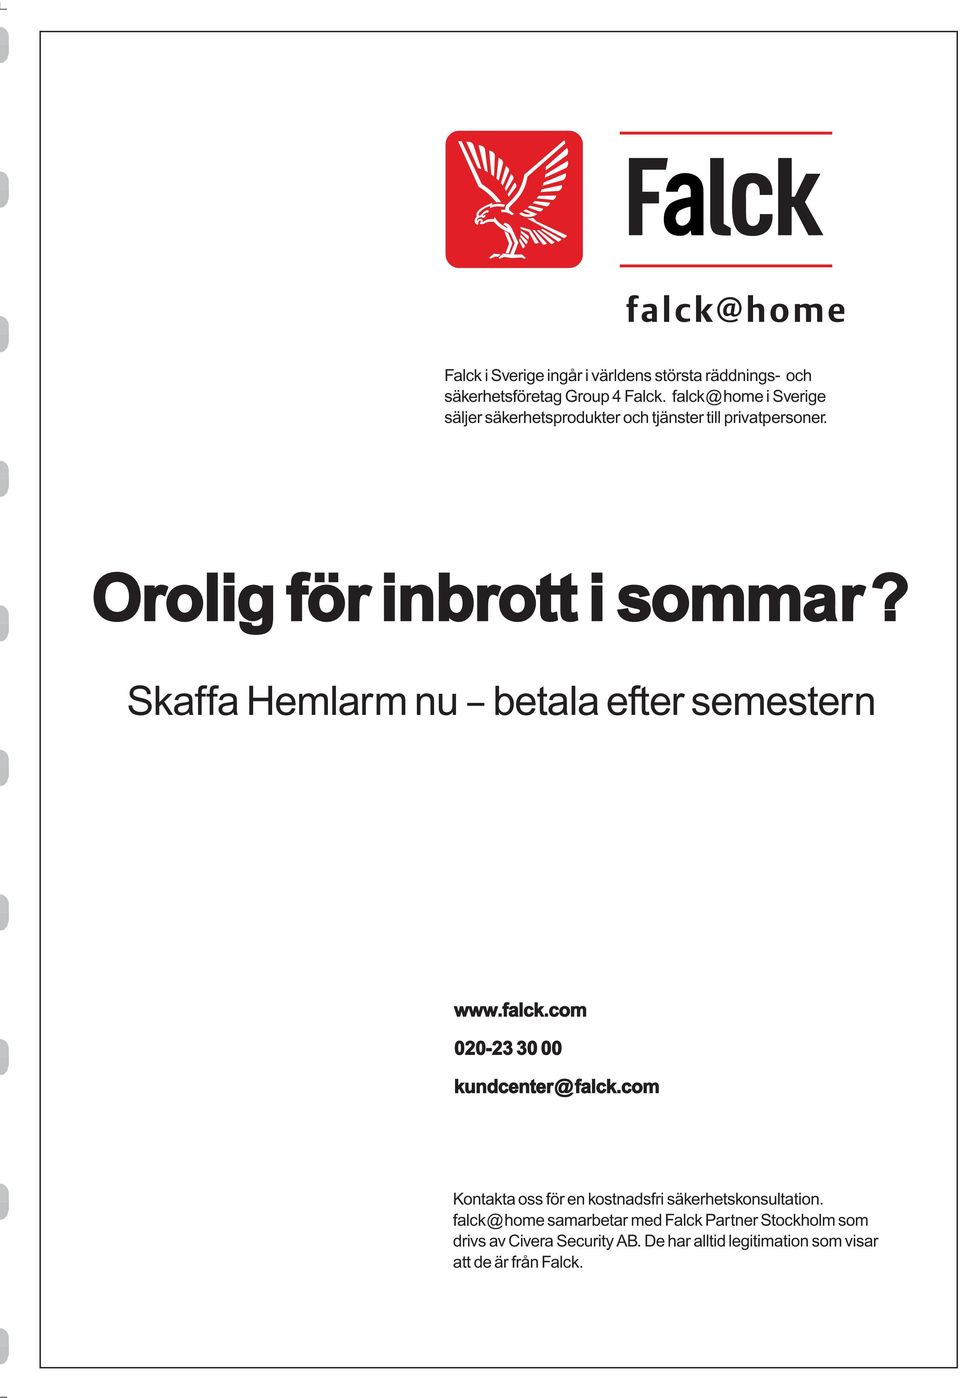 Skaffa Hemlarm nu betala efter semestern www.falck.com 020-23 30 00 kundcenter@falck.